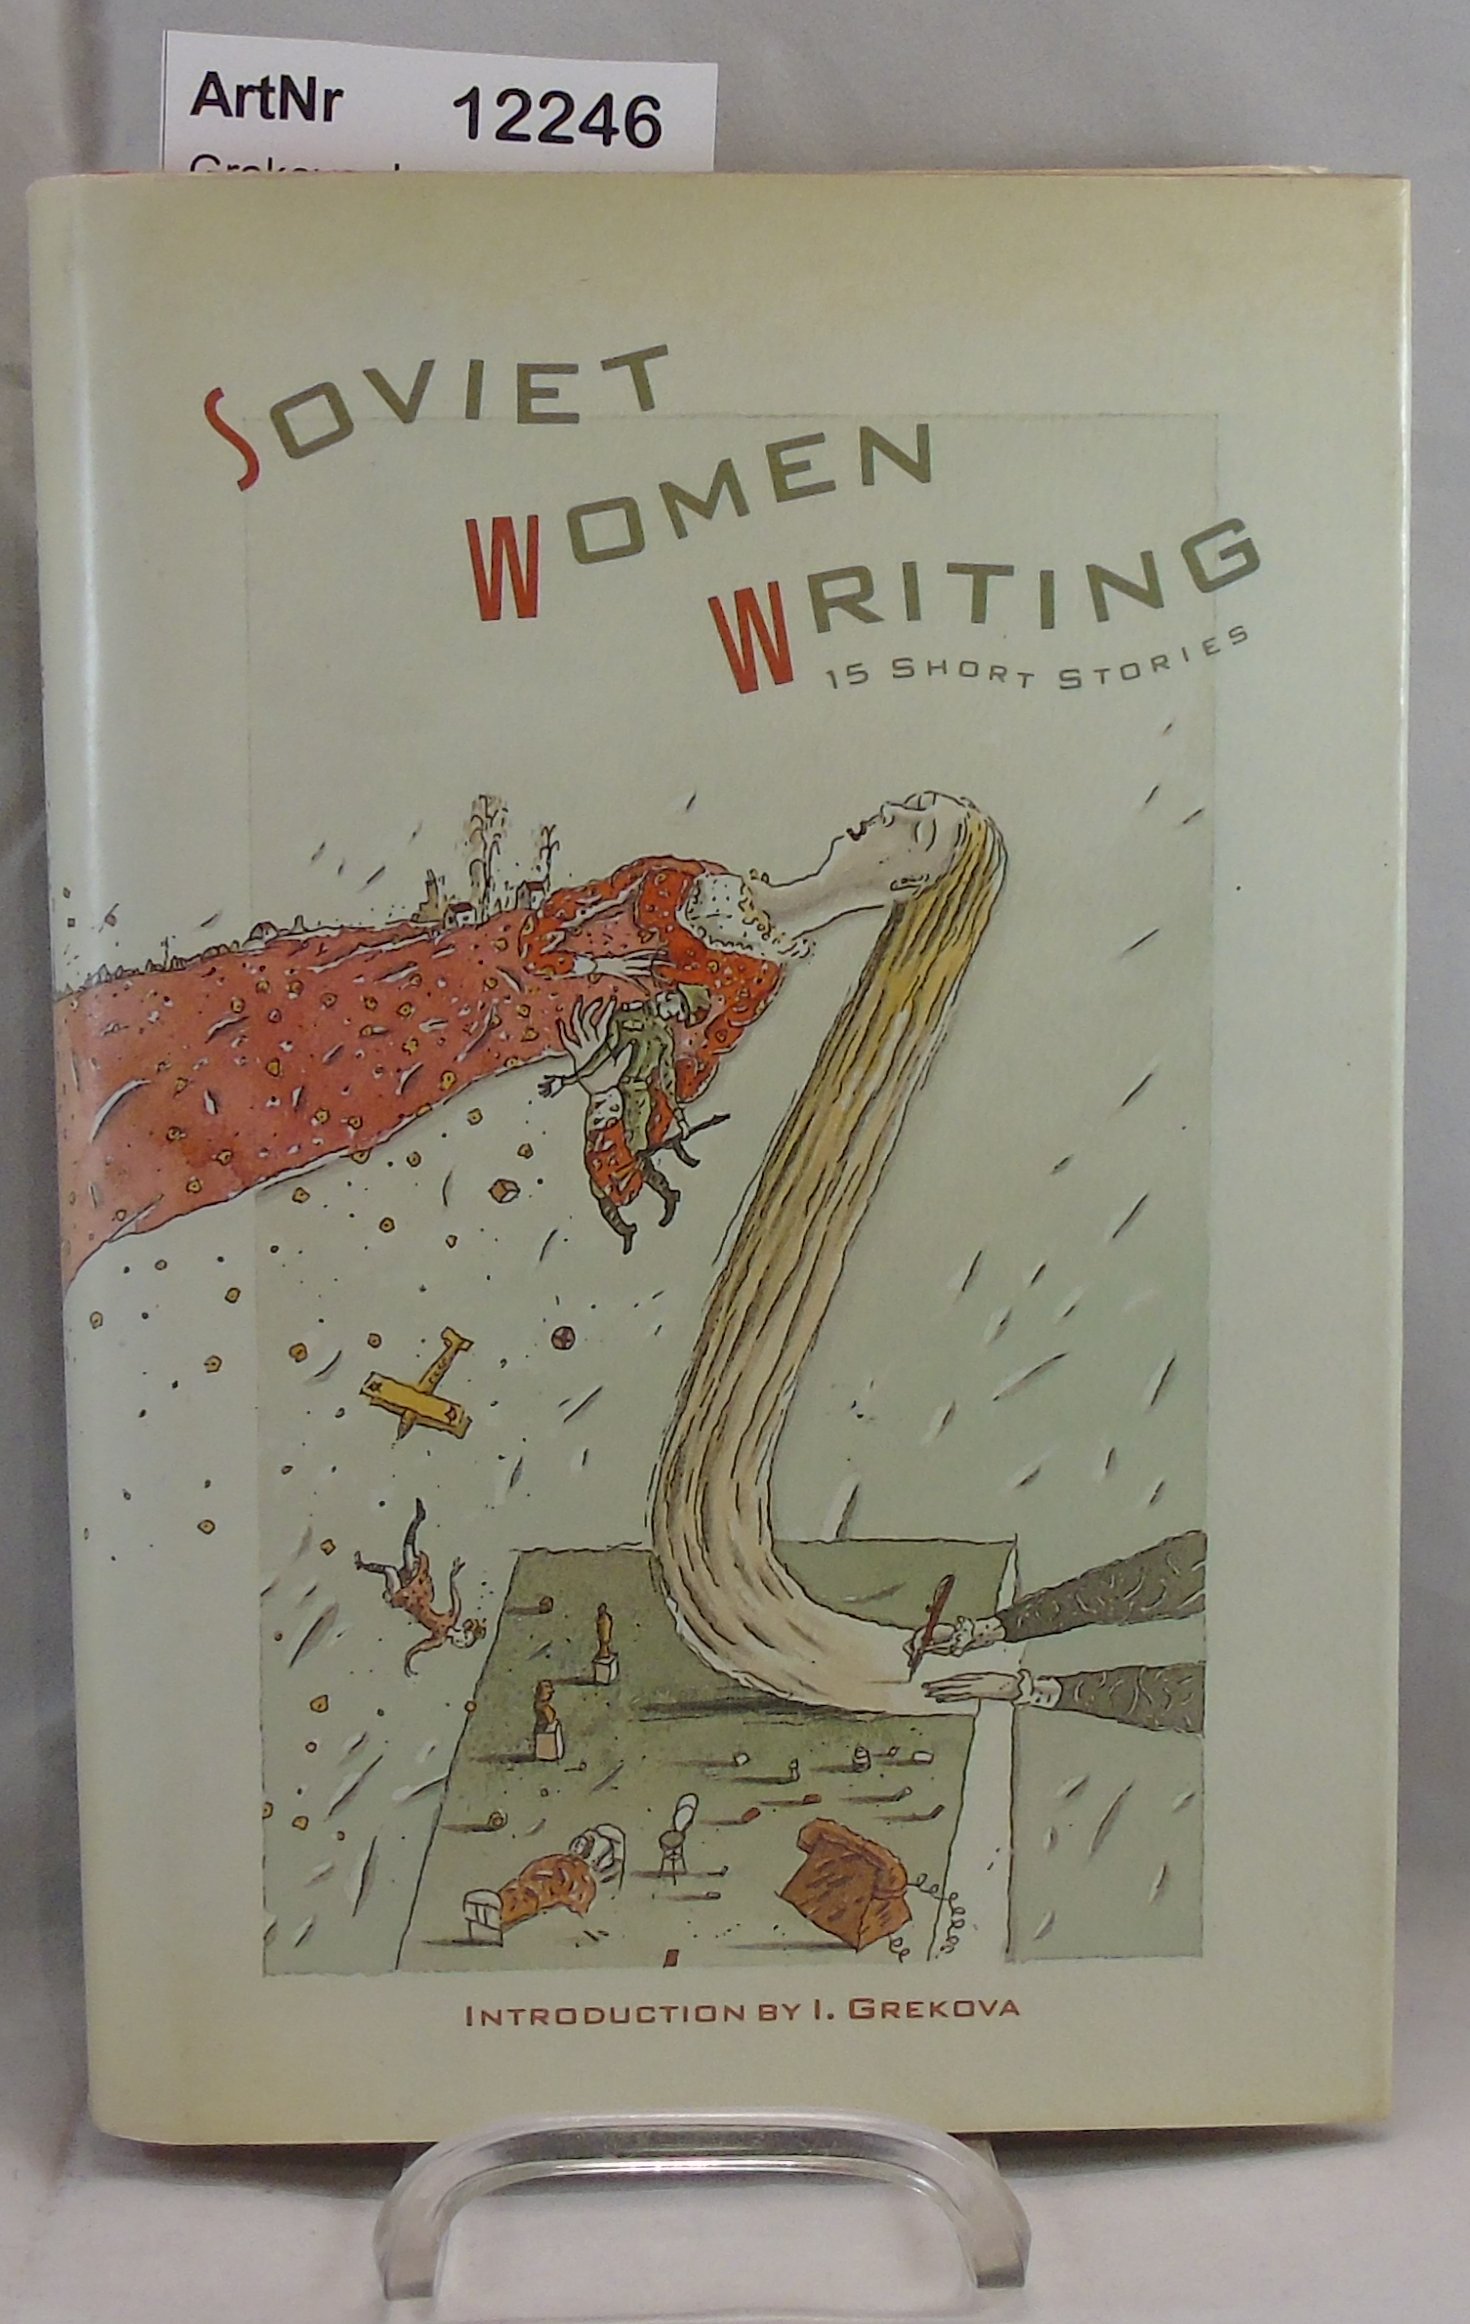 Grekova, I.   Soviet Women Writing. 15 Short Stories 